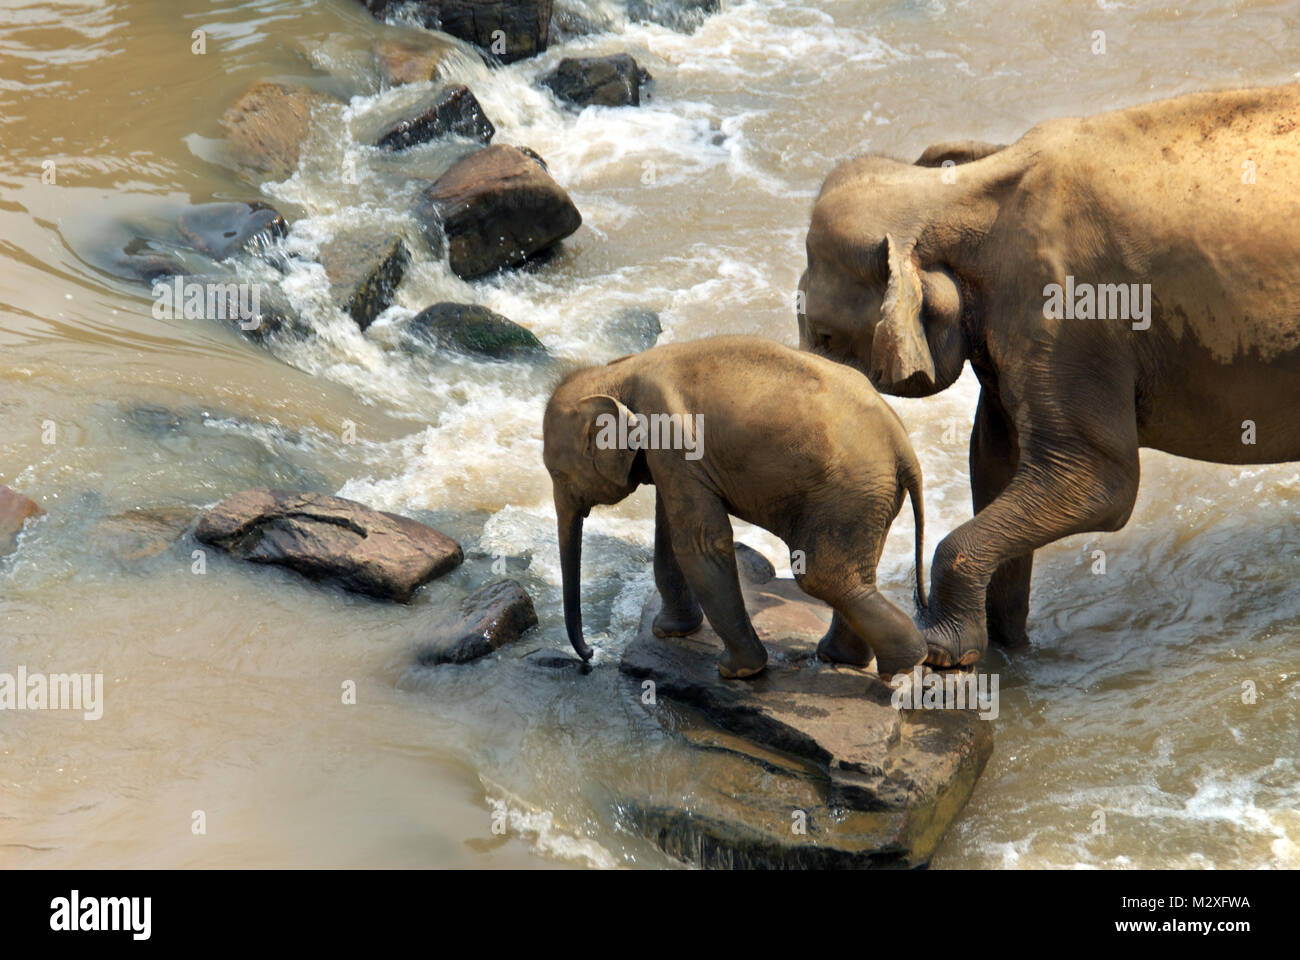 Elephants on the Maha Oya river in Sri Lanka which is part of the Pinnawala Elephant Orphanage. Stock Photo